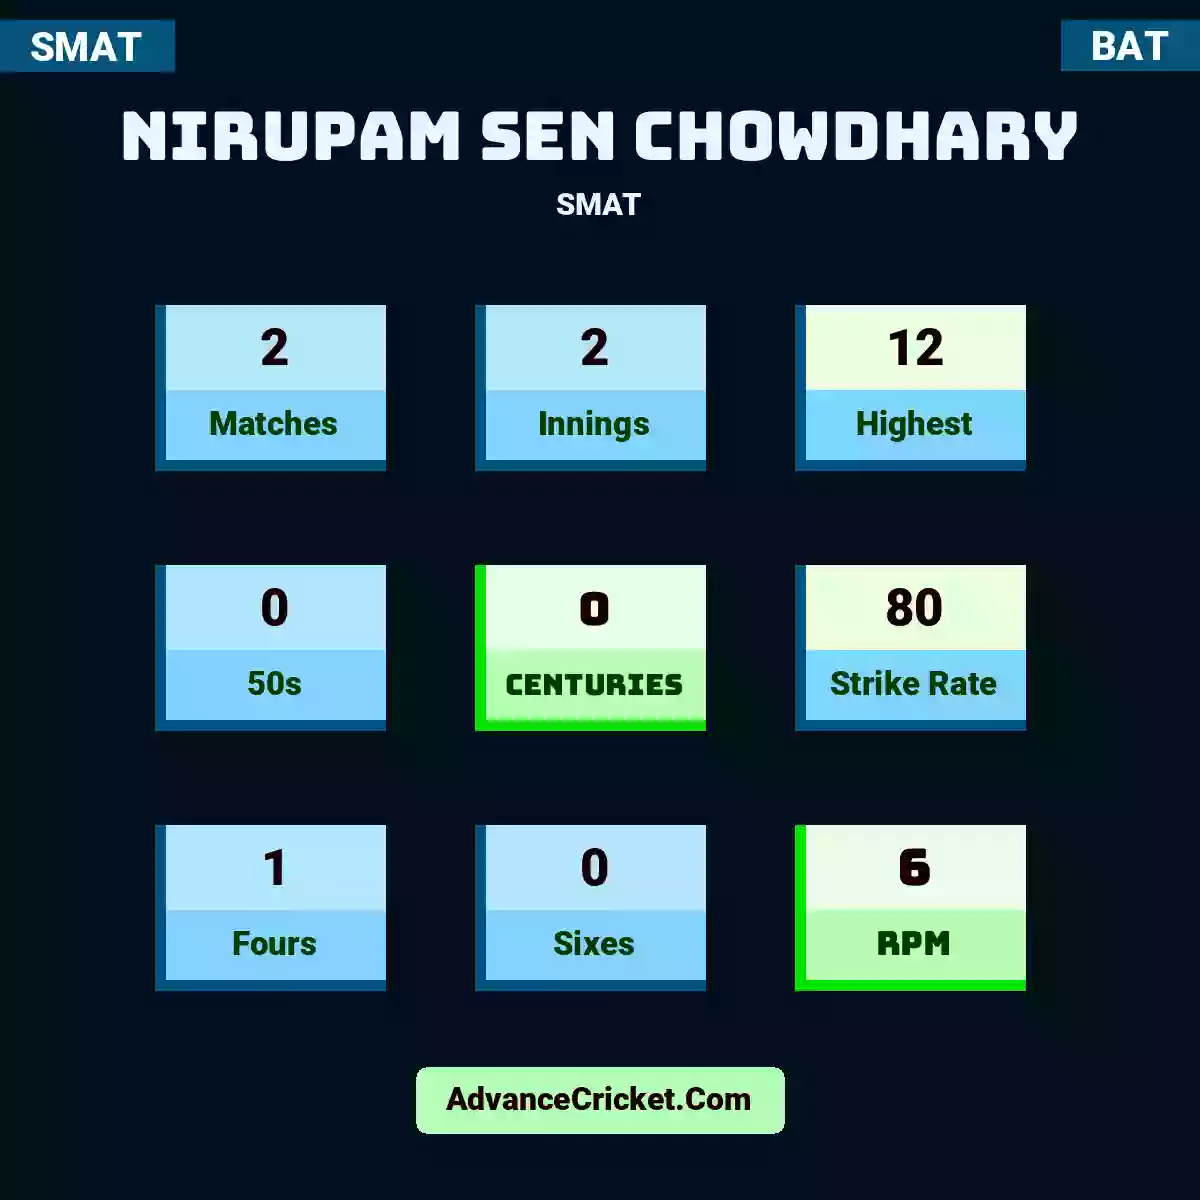 Nirupam Sen Chowdhary SMAT , Nirupam Sen Chowdhary played 2 matches, scored 12 runs as highest, 0 half-centuries, and 0 centuries, with a strike rate of 80. N.Sen.Chowdhary hit 1 fours and 0 sixes, with an RPM of 6.